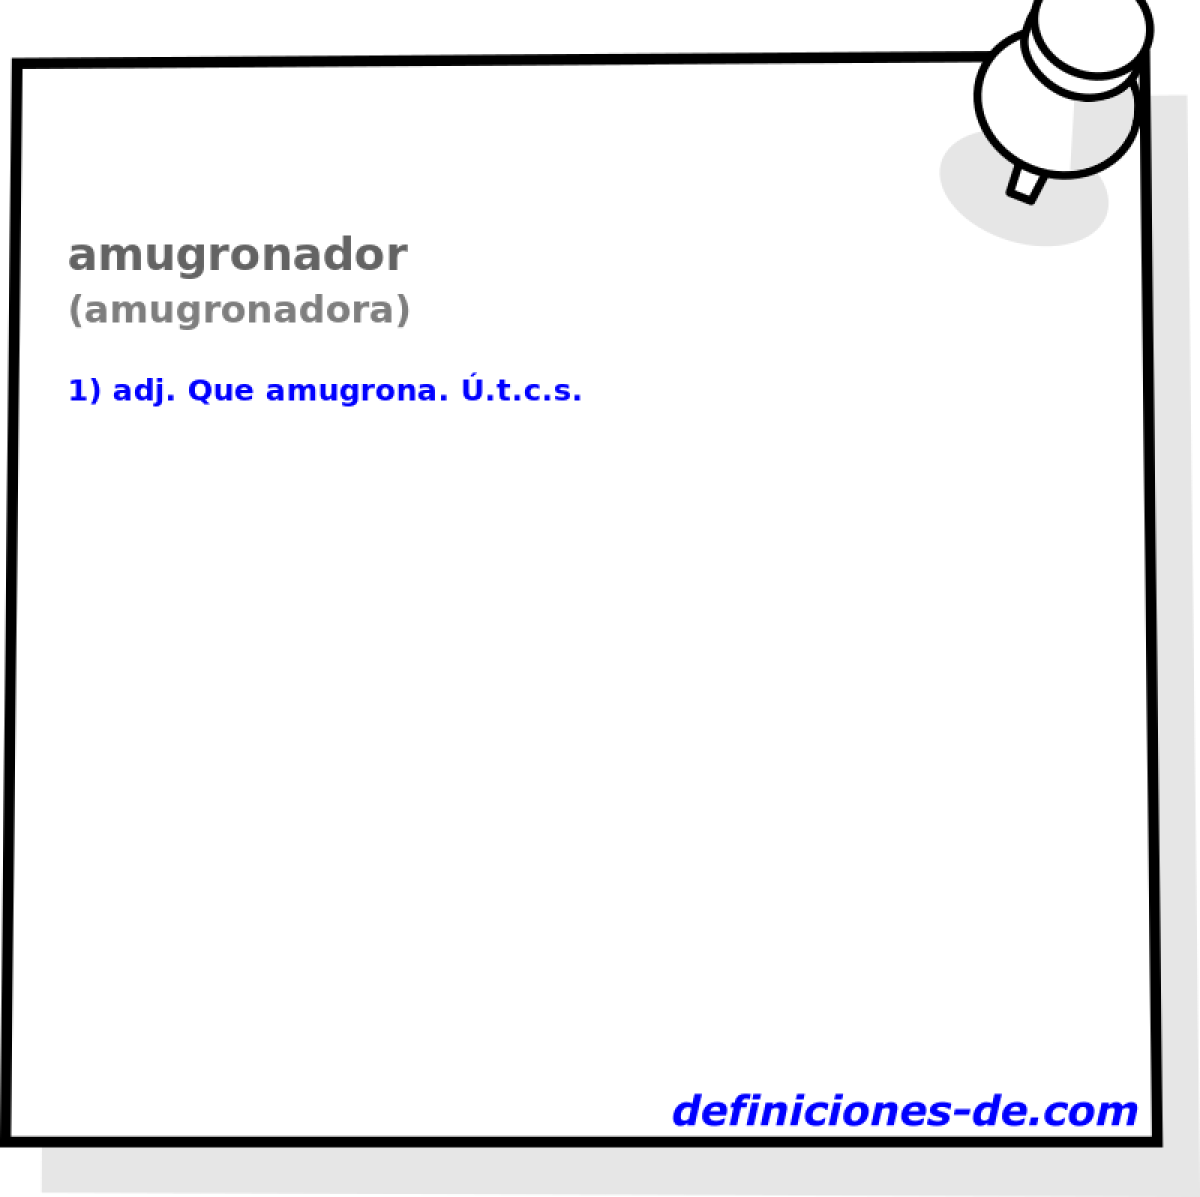 amugronador (amugronadora)